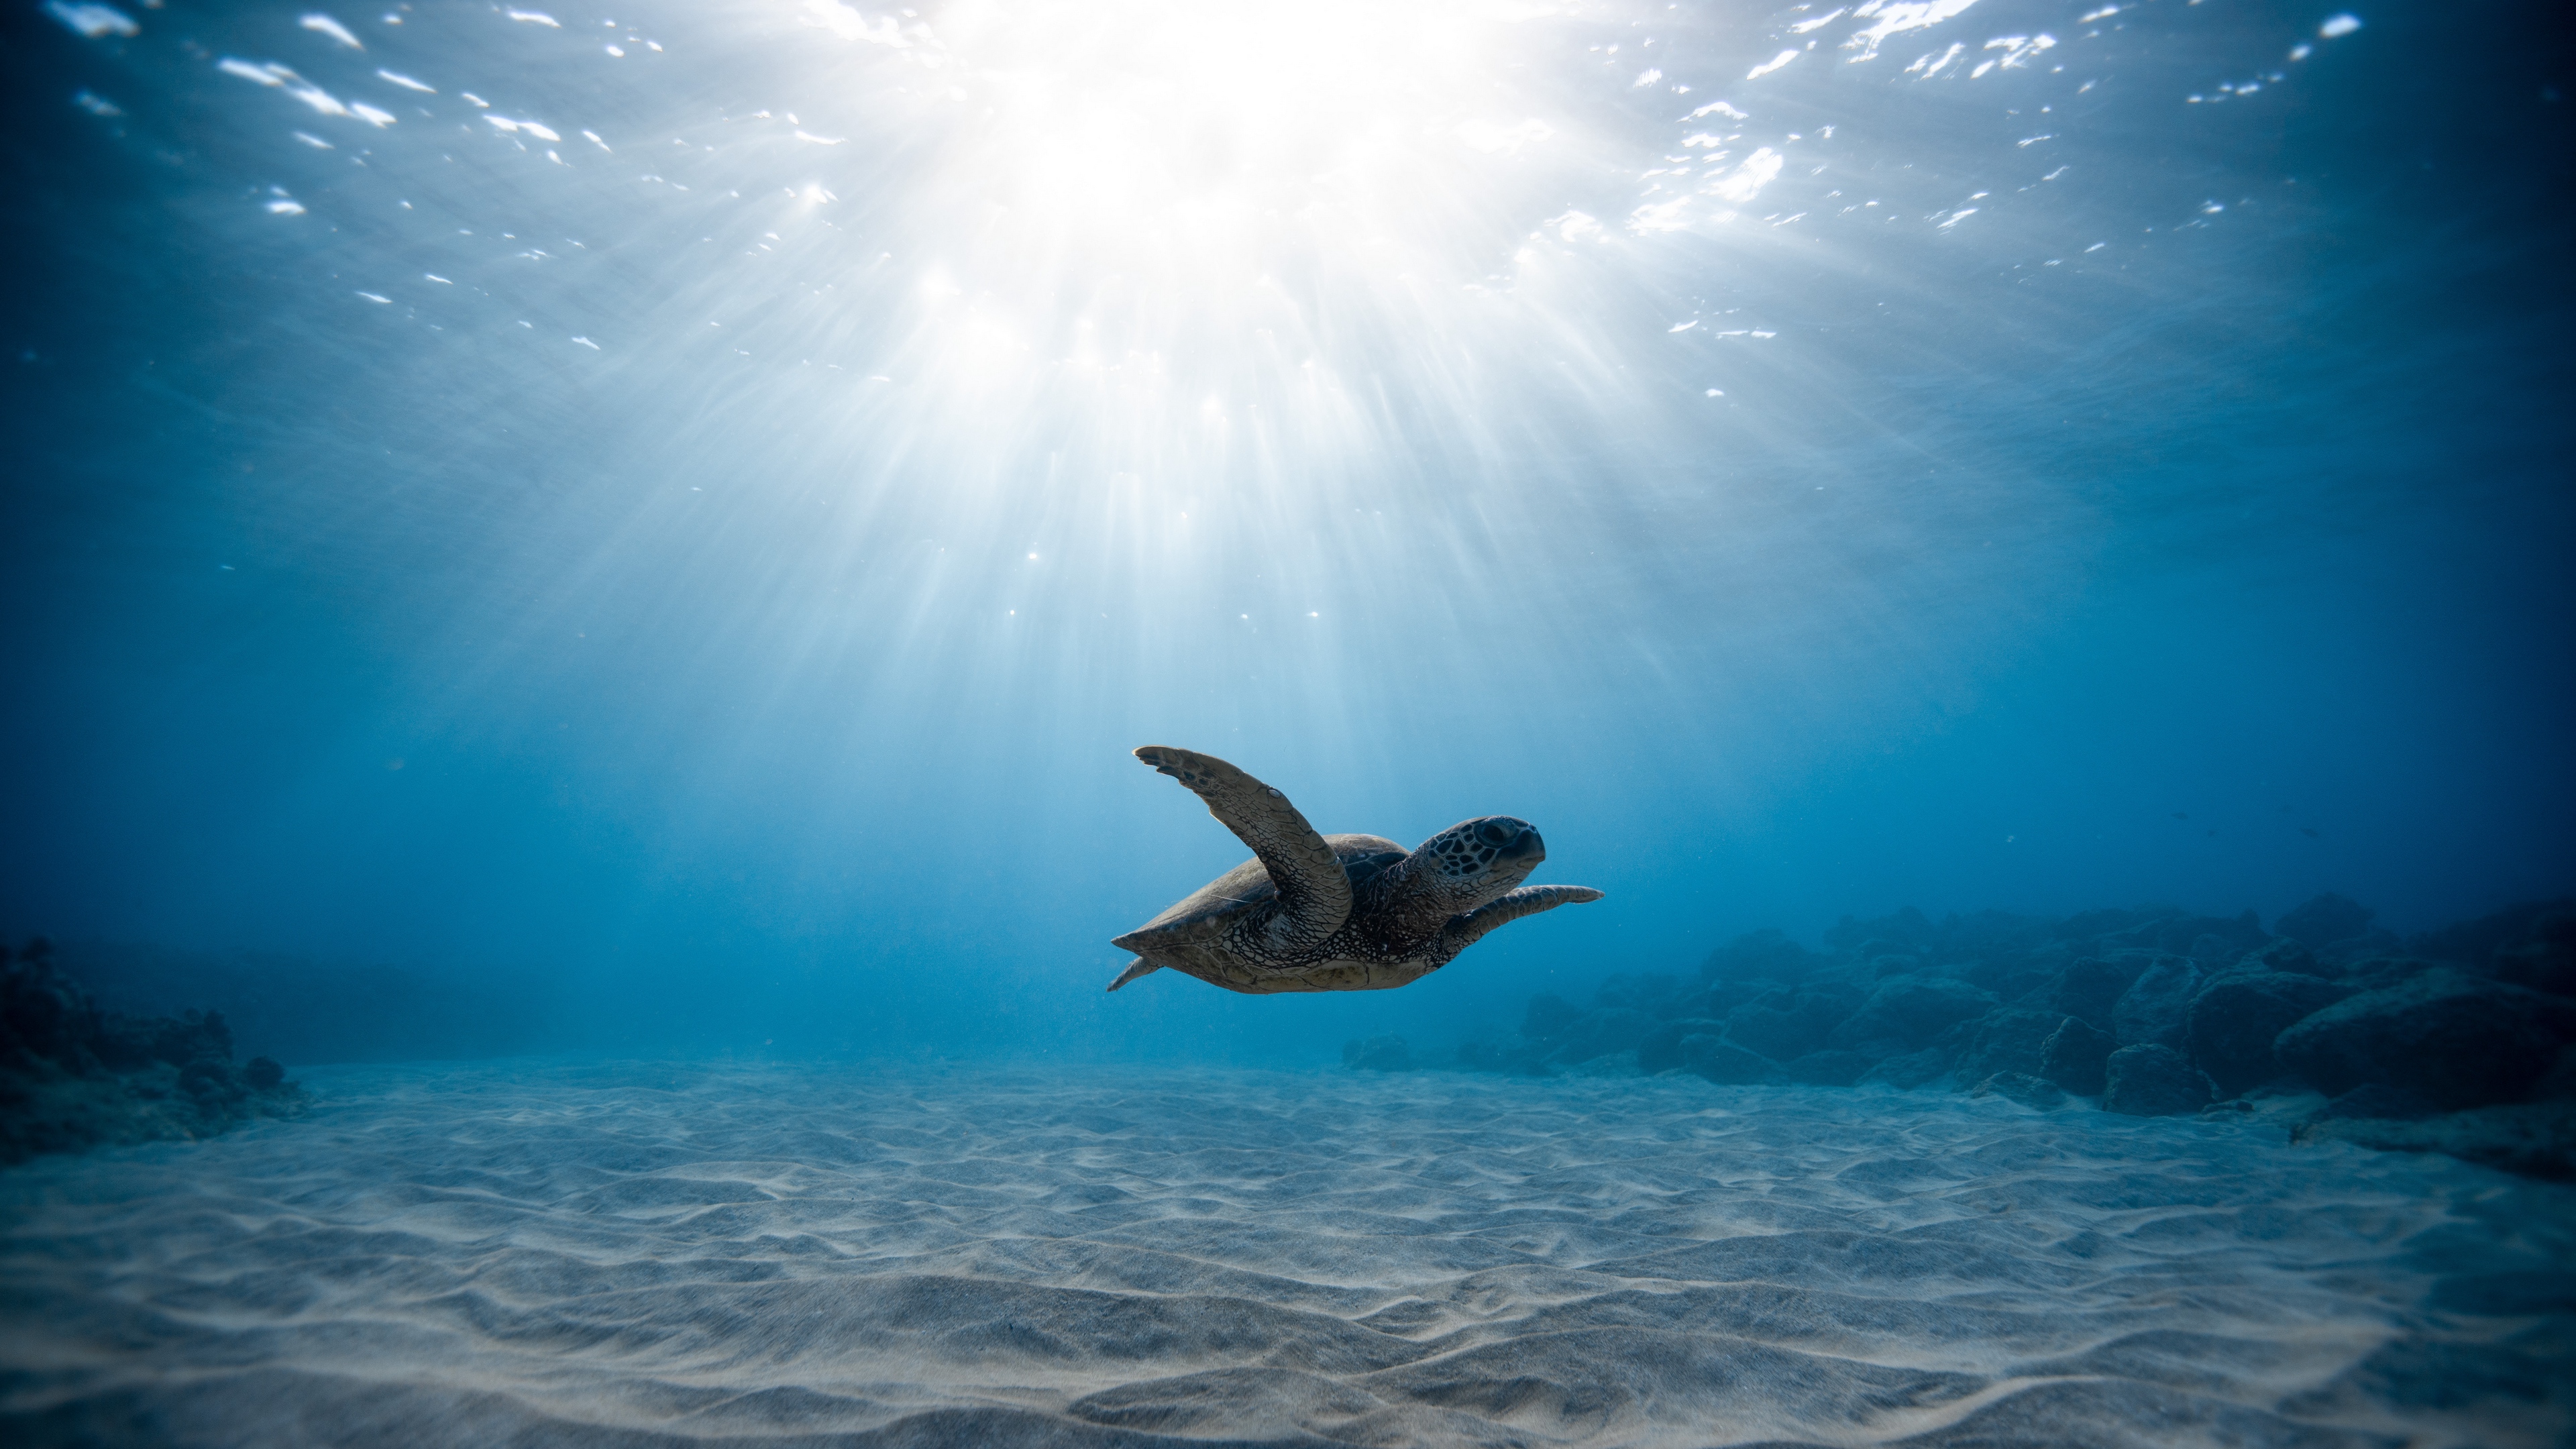 Turtle Ocean View Underwater Swimming Sand 3840x2160